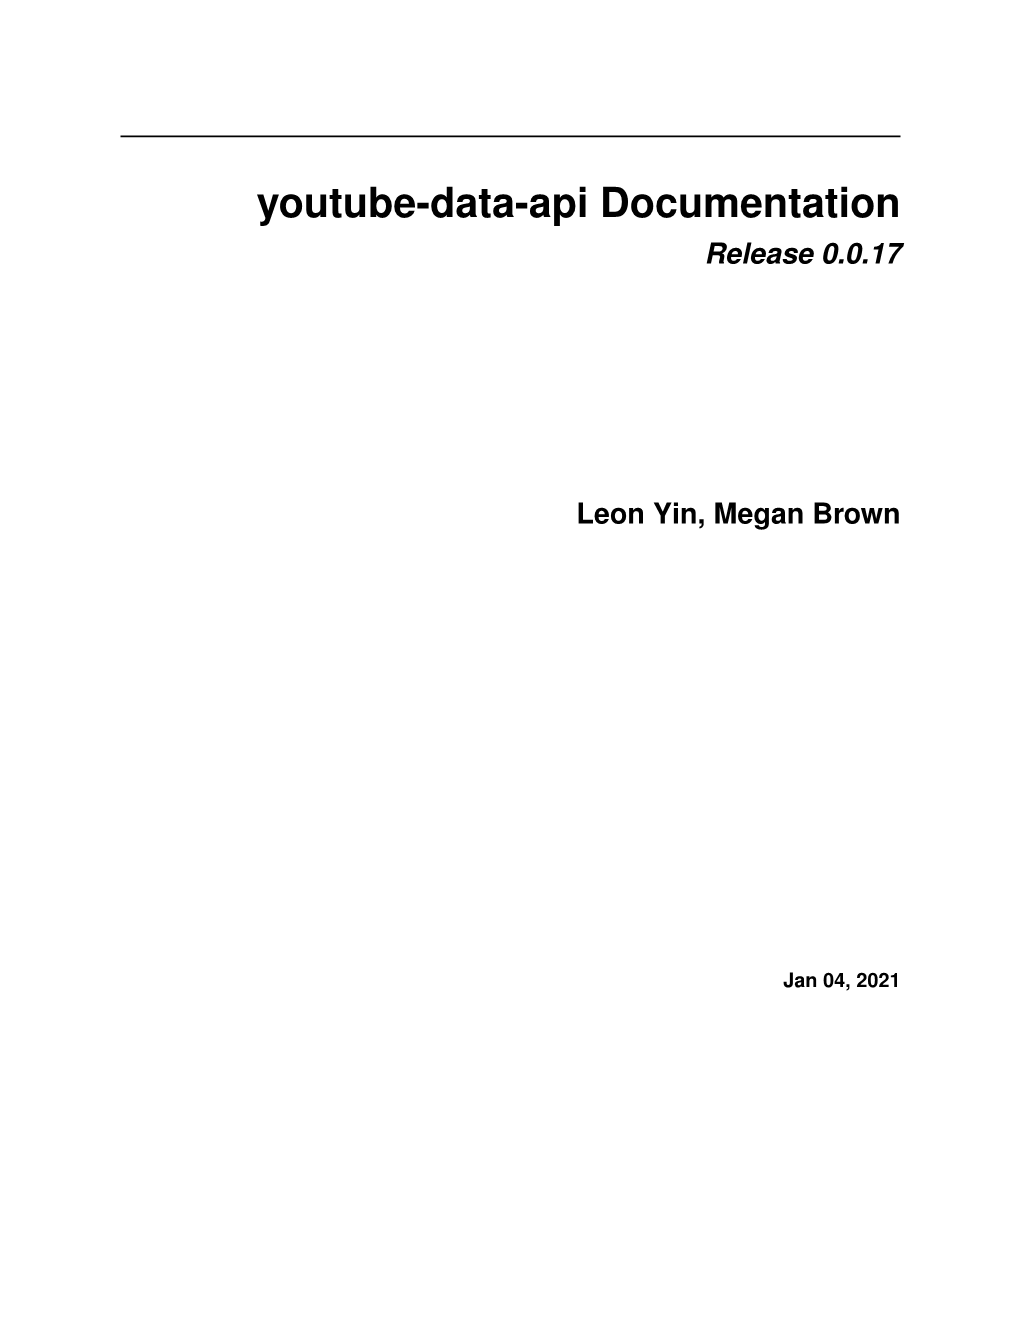 Youtube-Data-Api Documentation Release 0.0.17